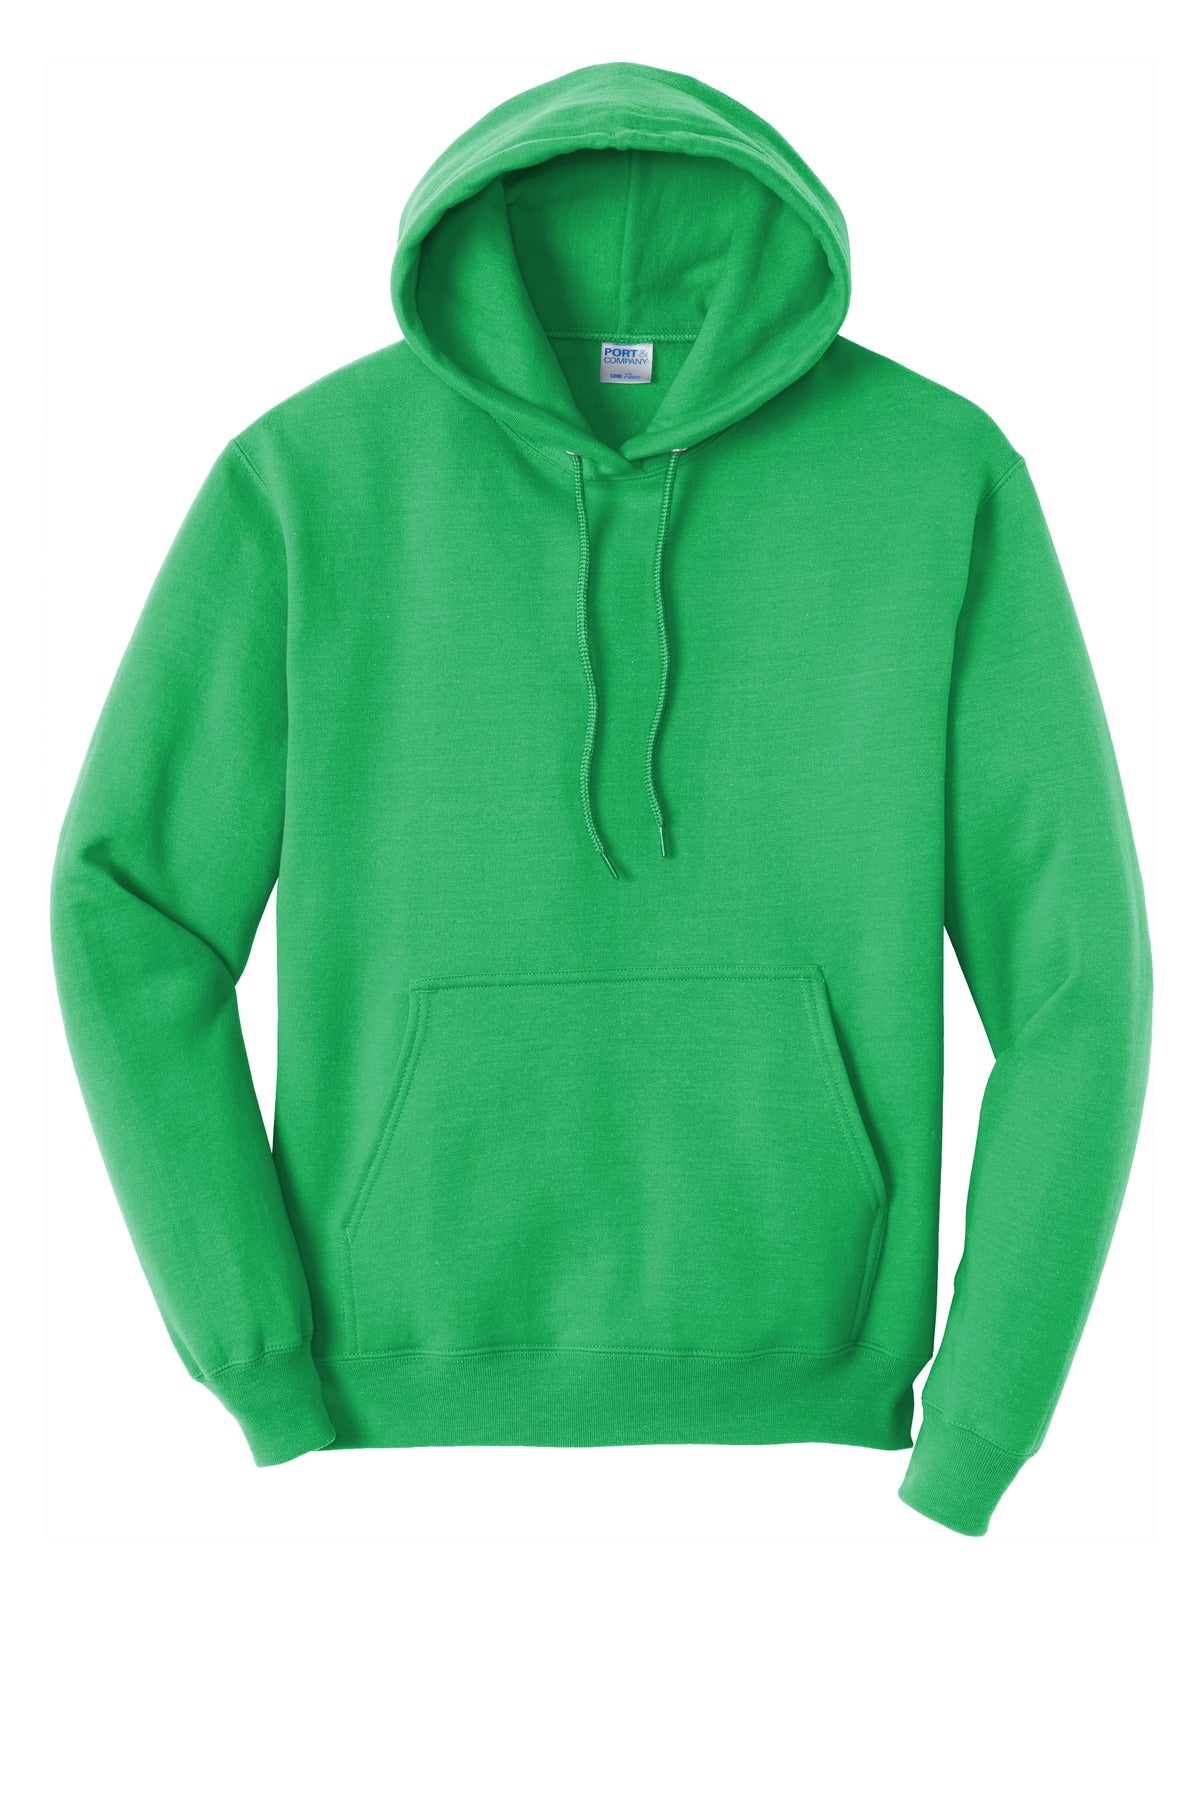 Port & Company - Core Fleece Pullover Hooded Sweatshirt. PC78H - Clover Green